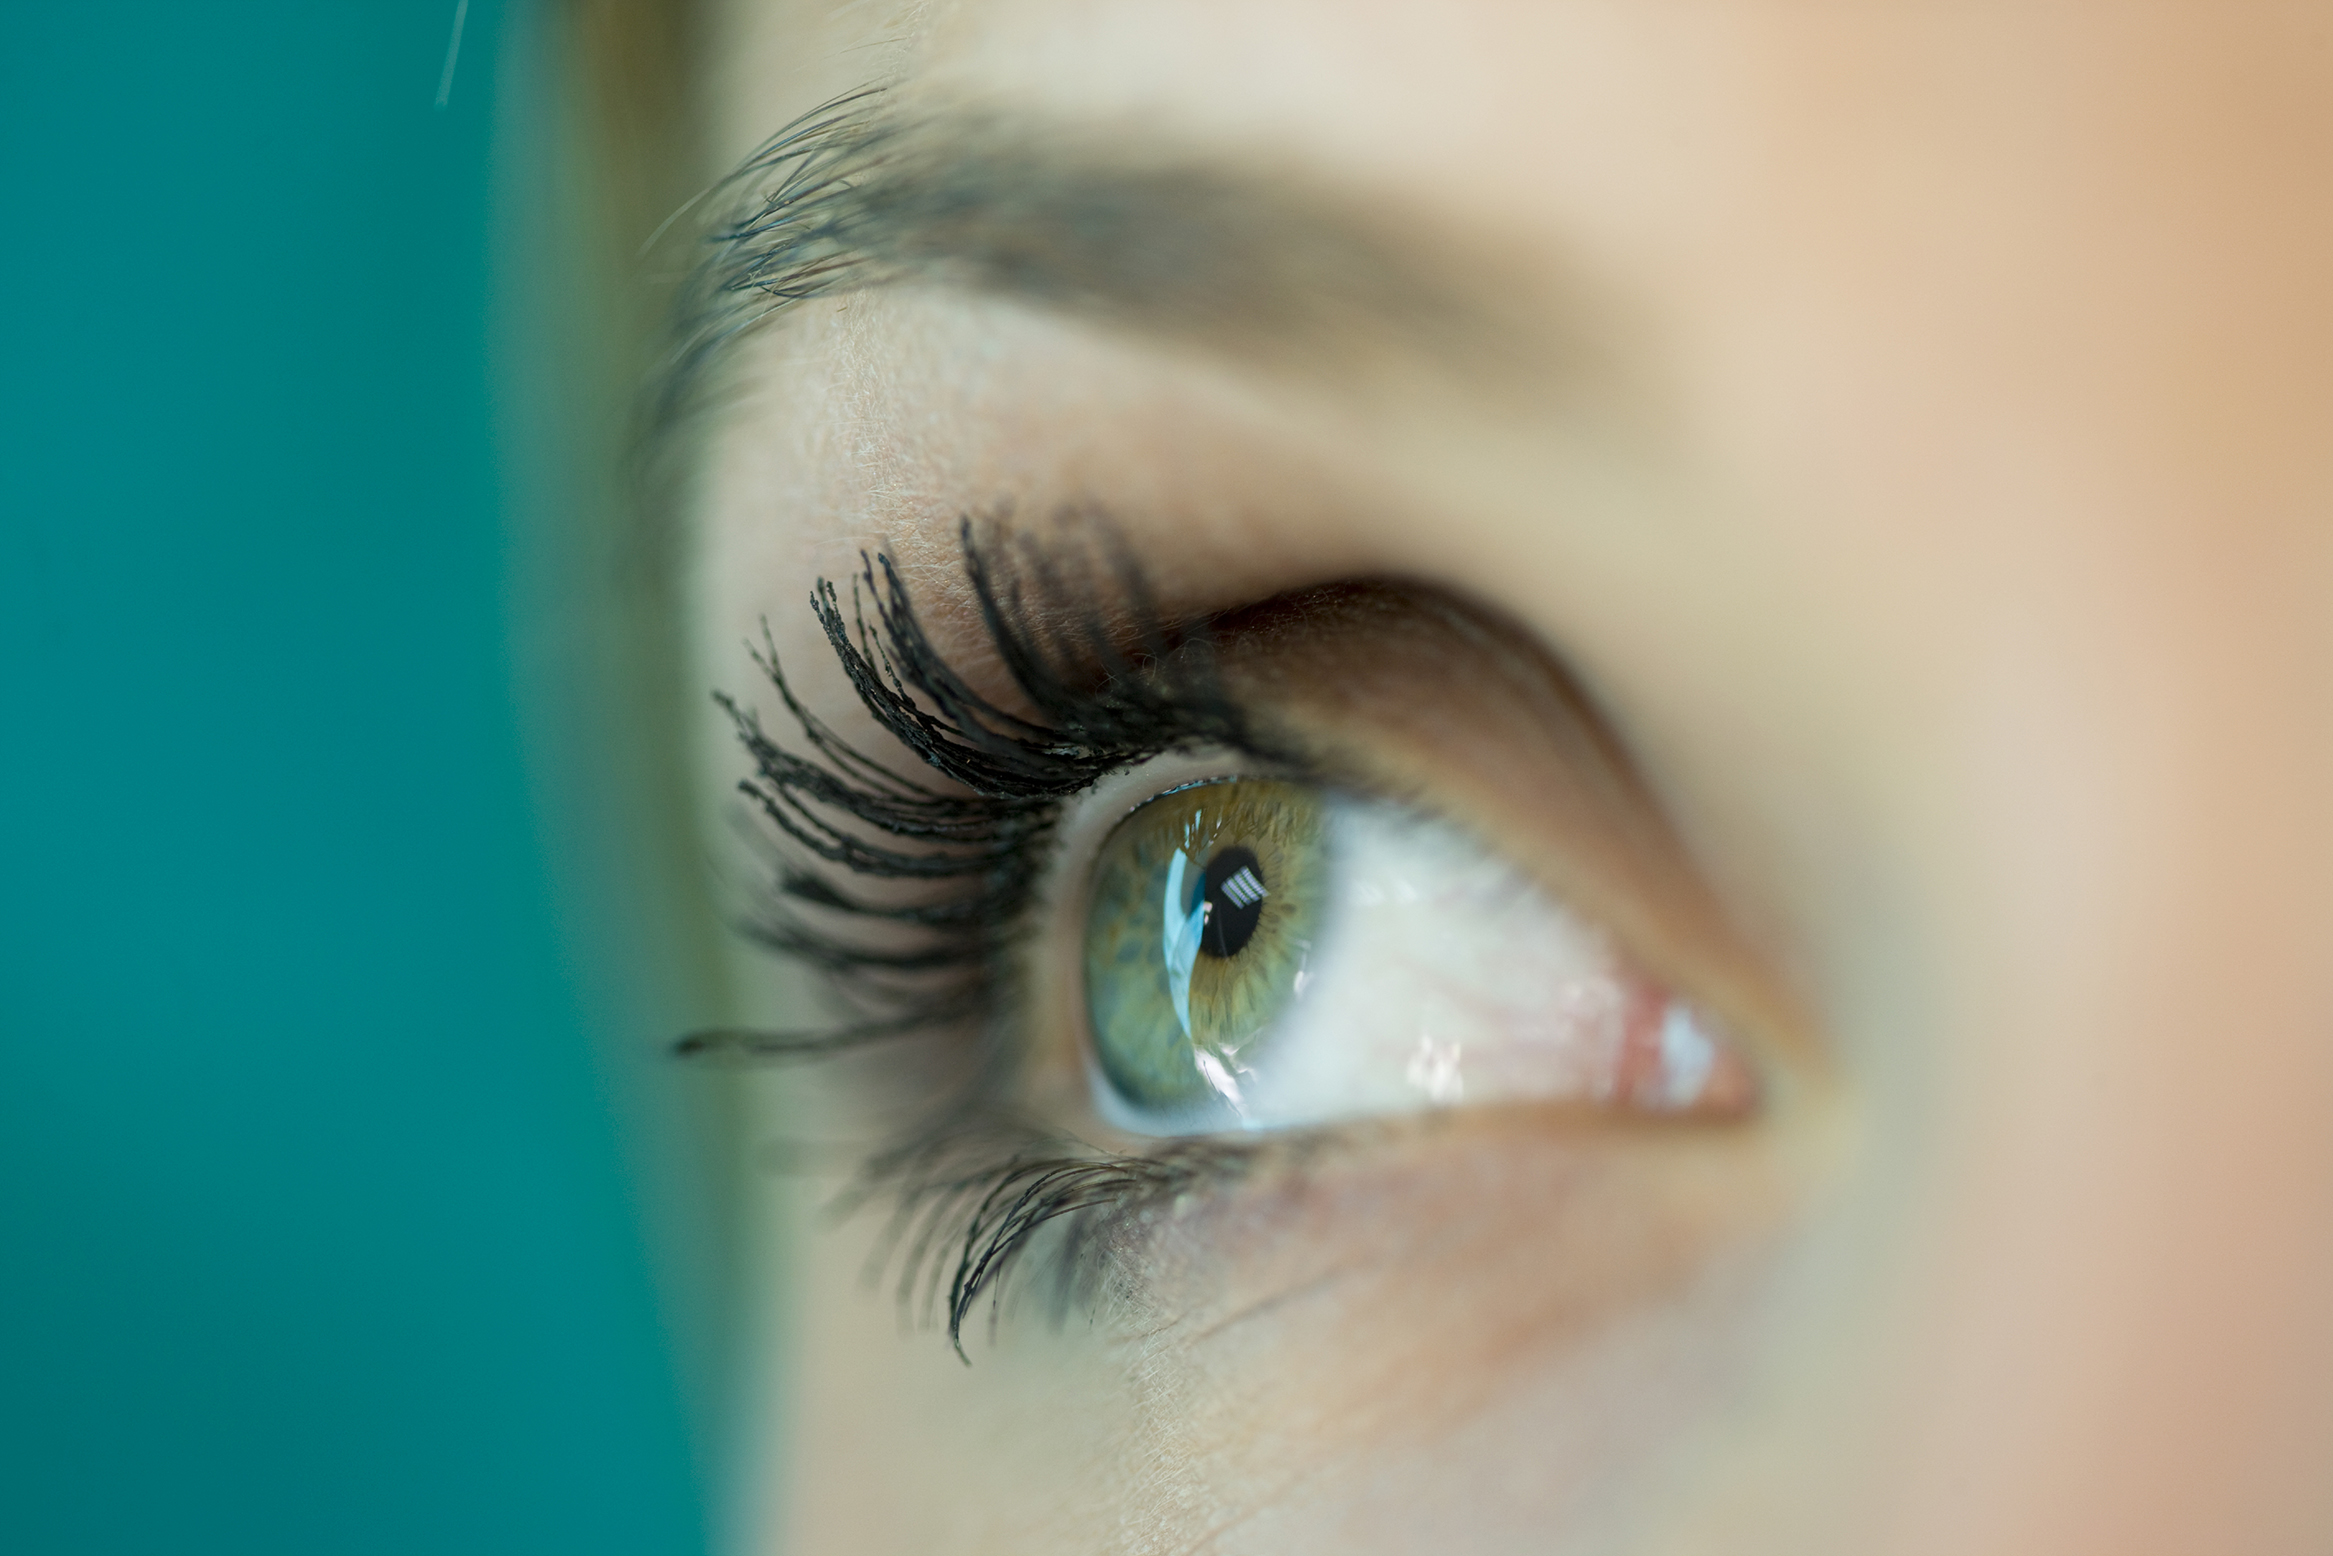 a woman's eye close up